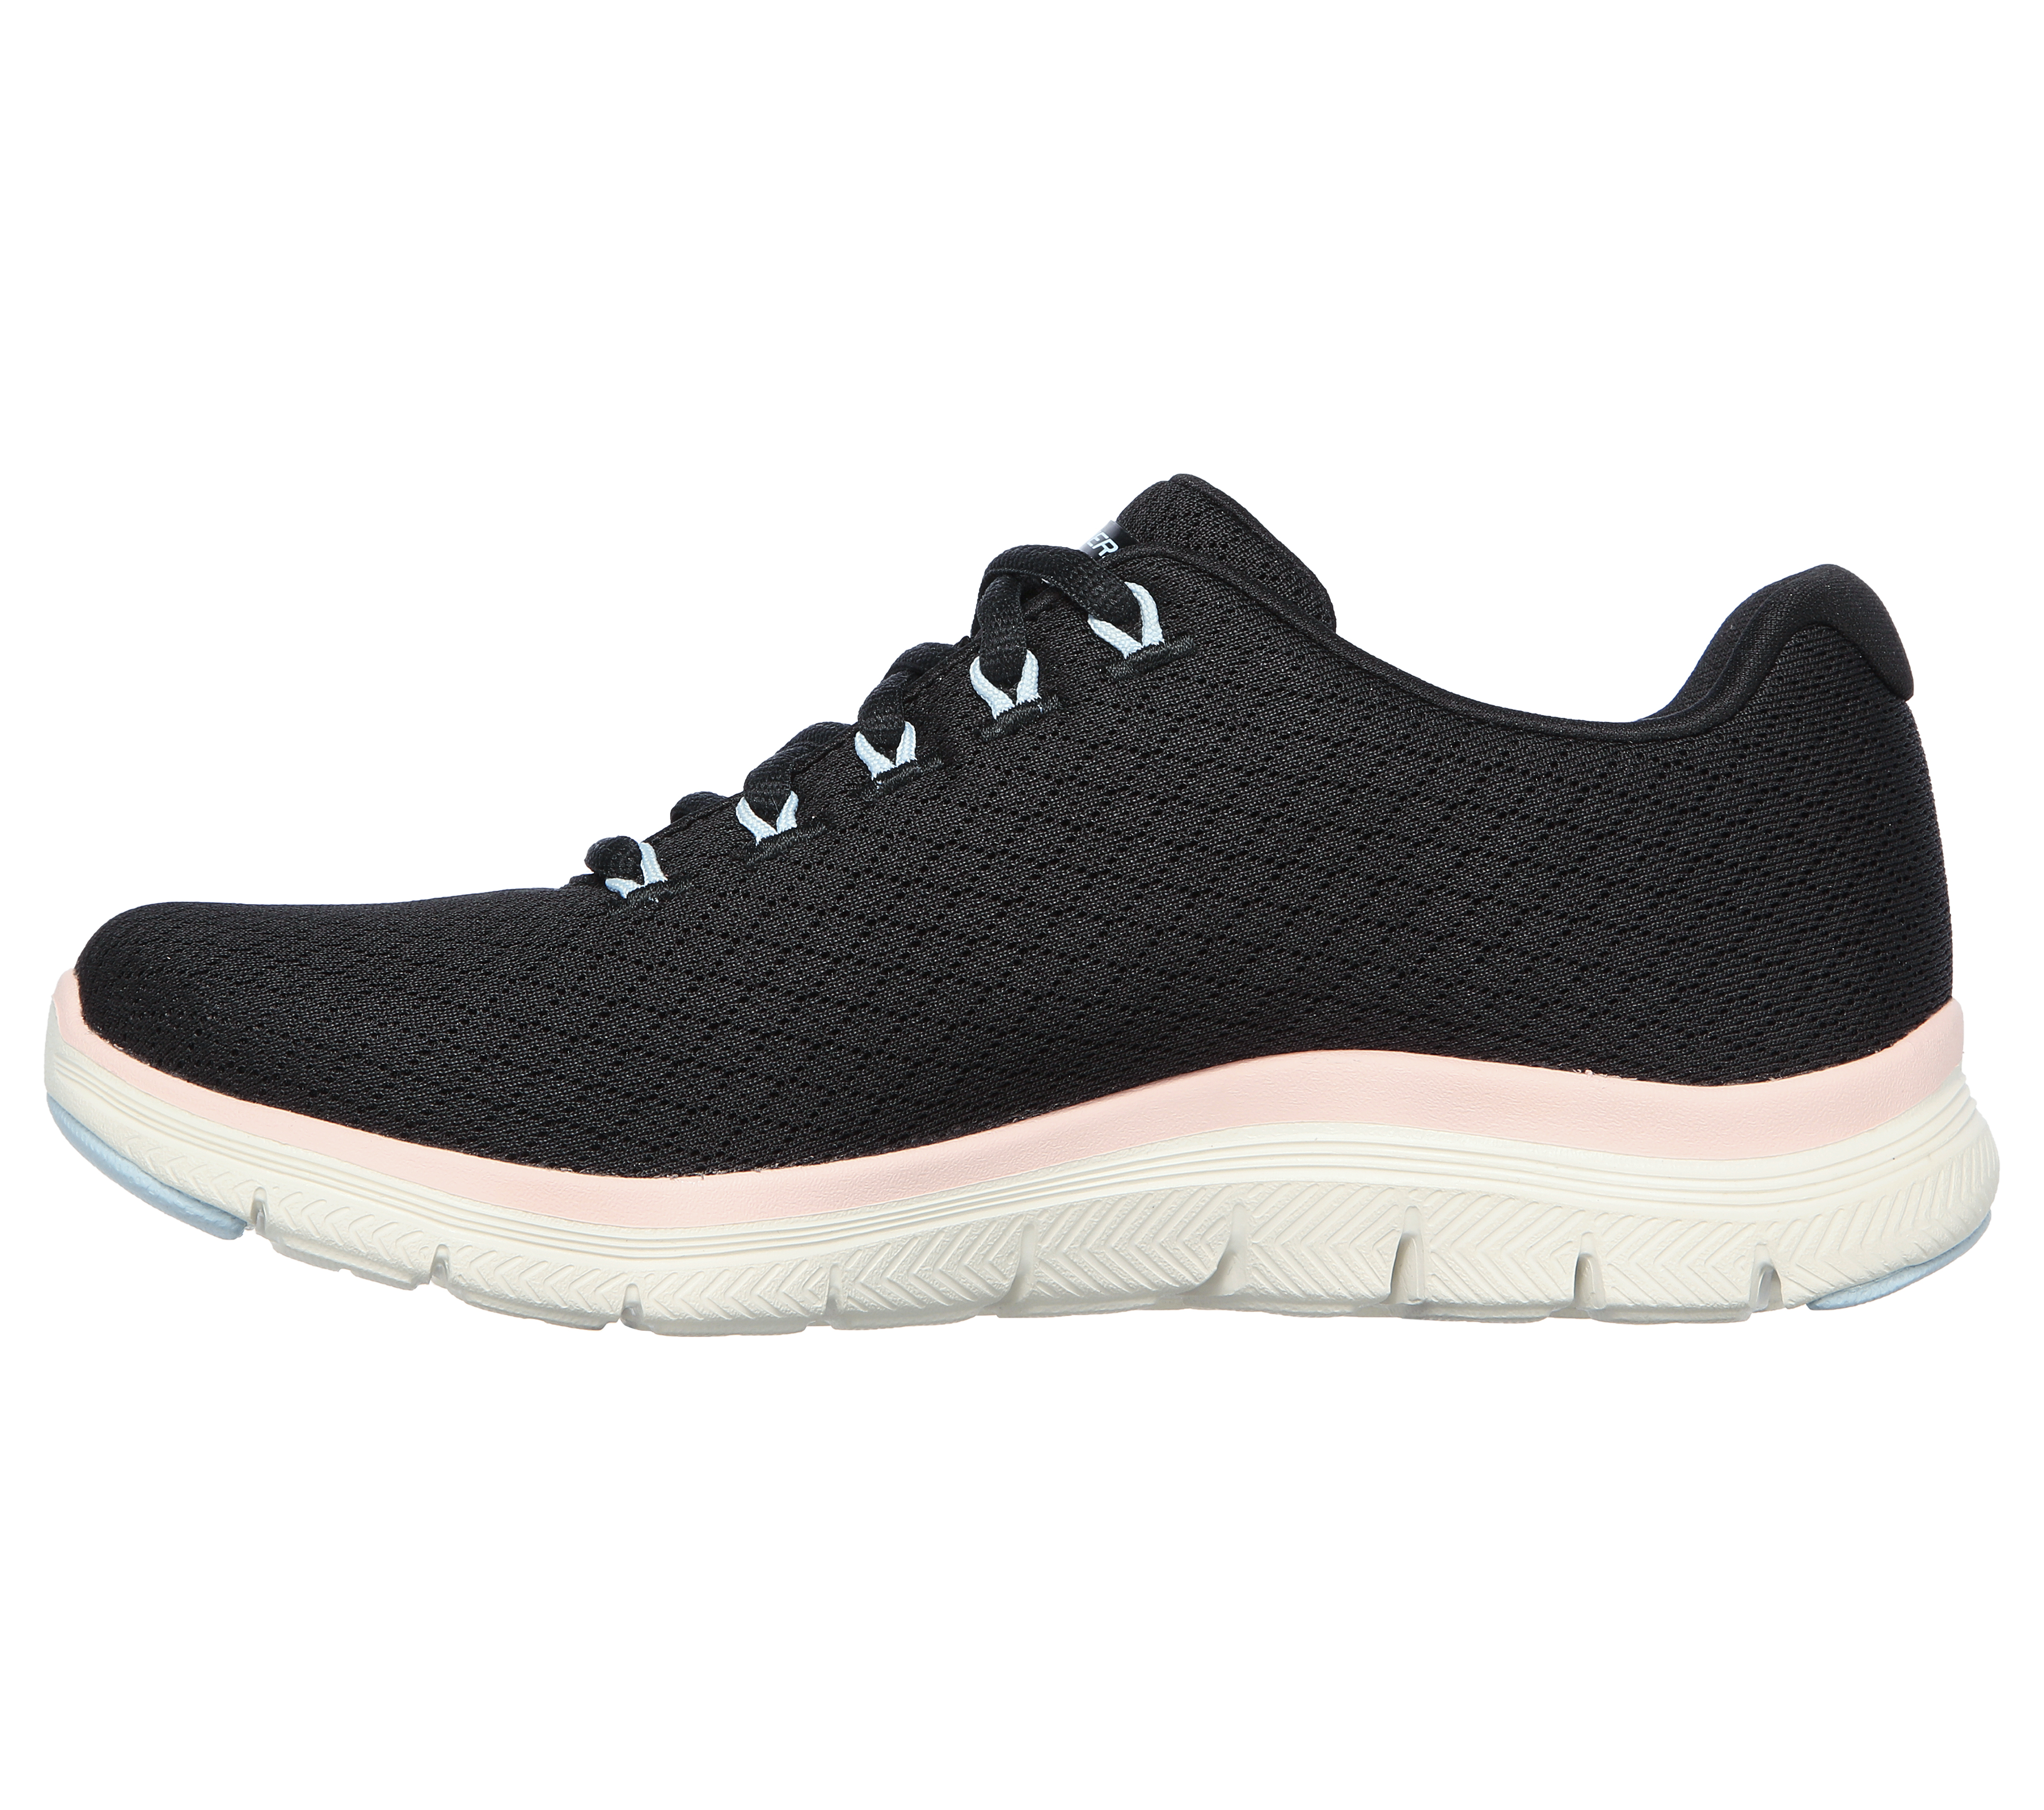 Skechers Womens Flex Appeal 4.0 Walking Shoes, Color: Black Pink - JCPenney